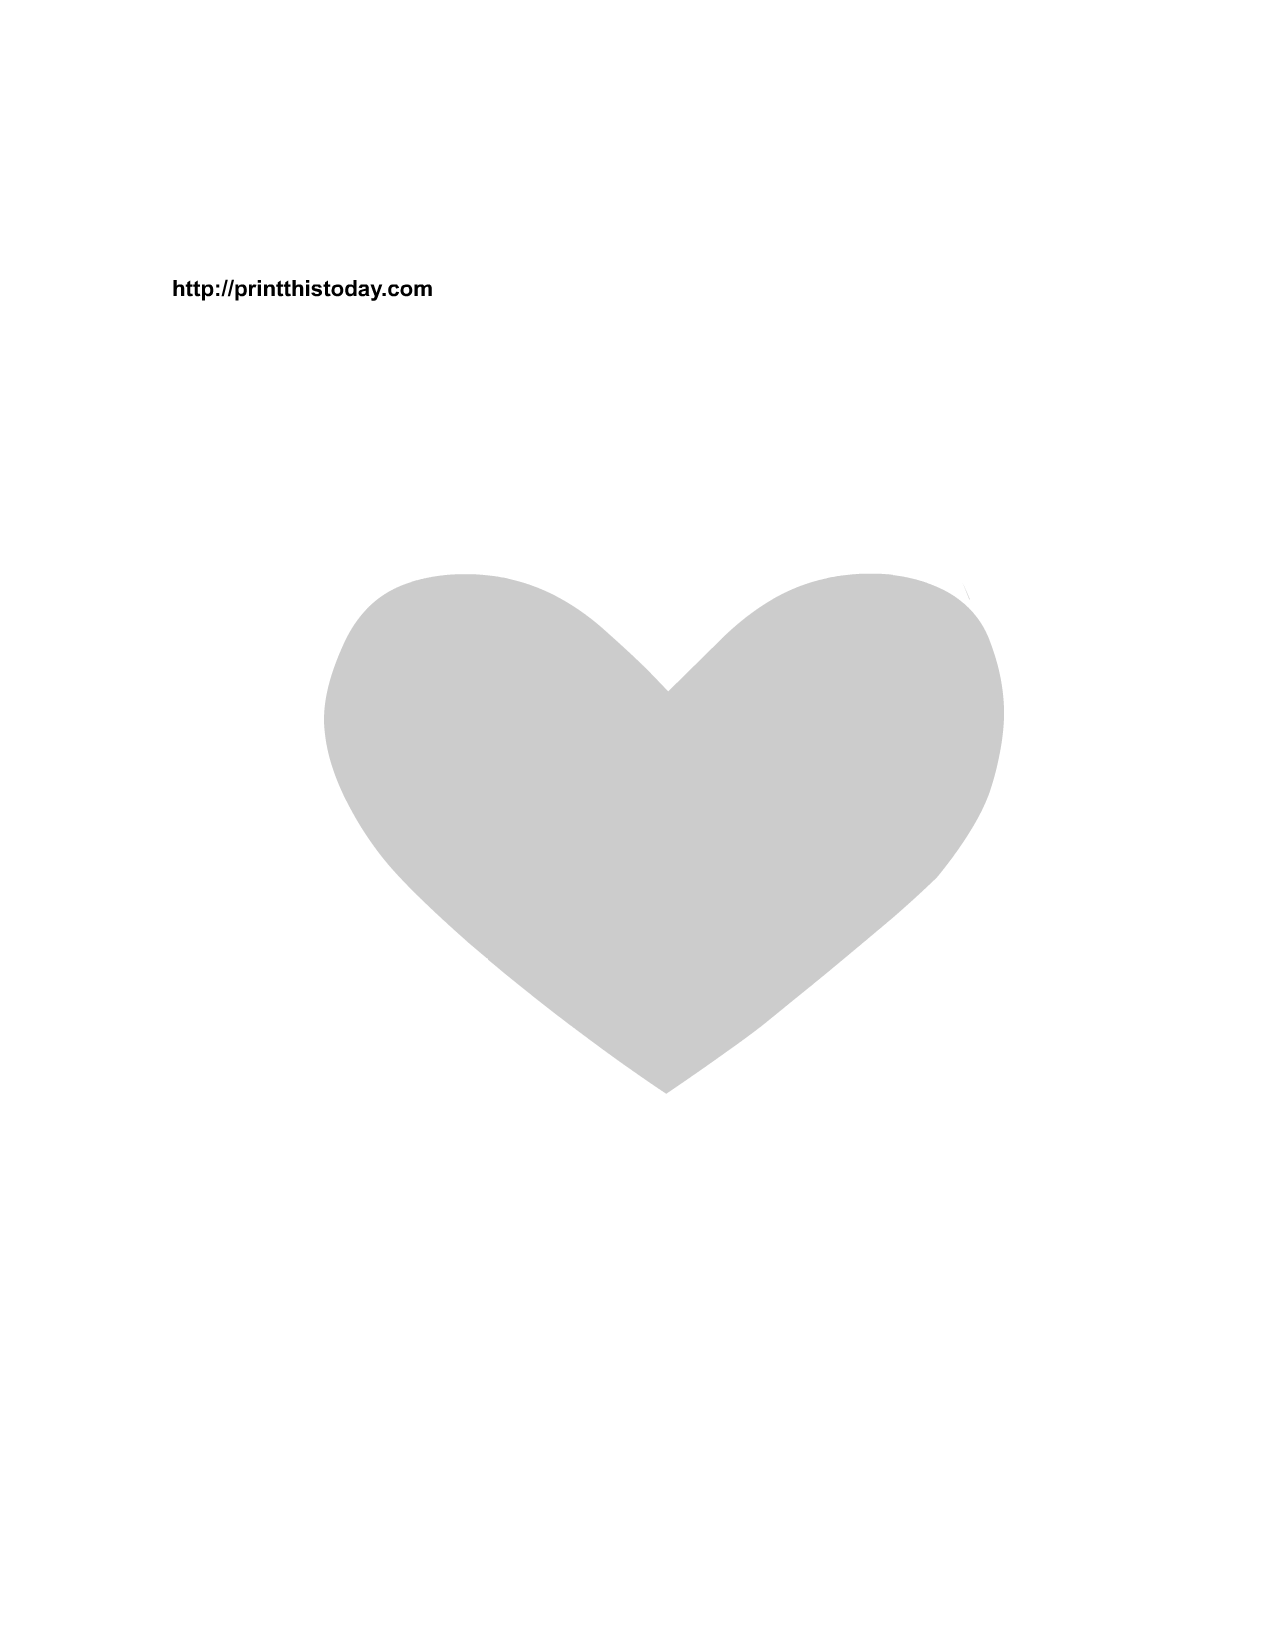 Free printable heart stencil